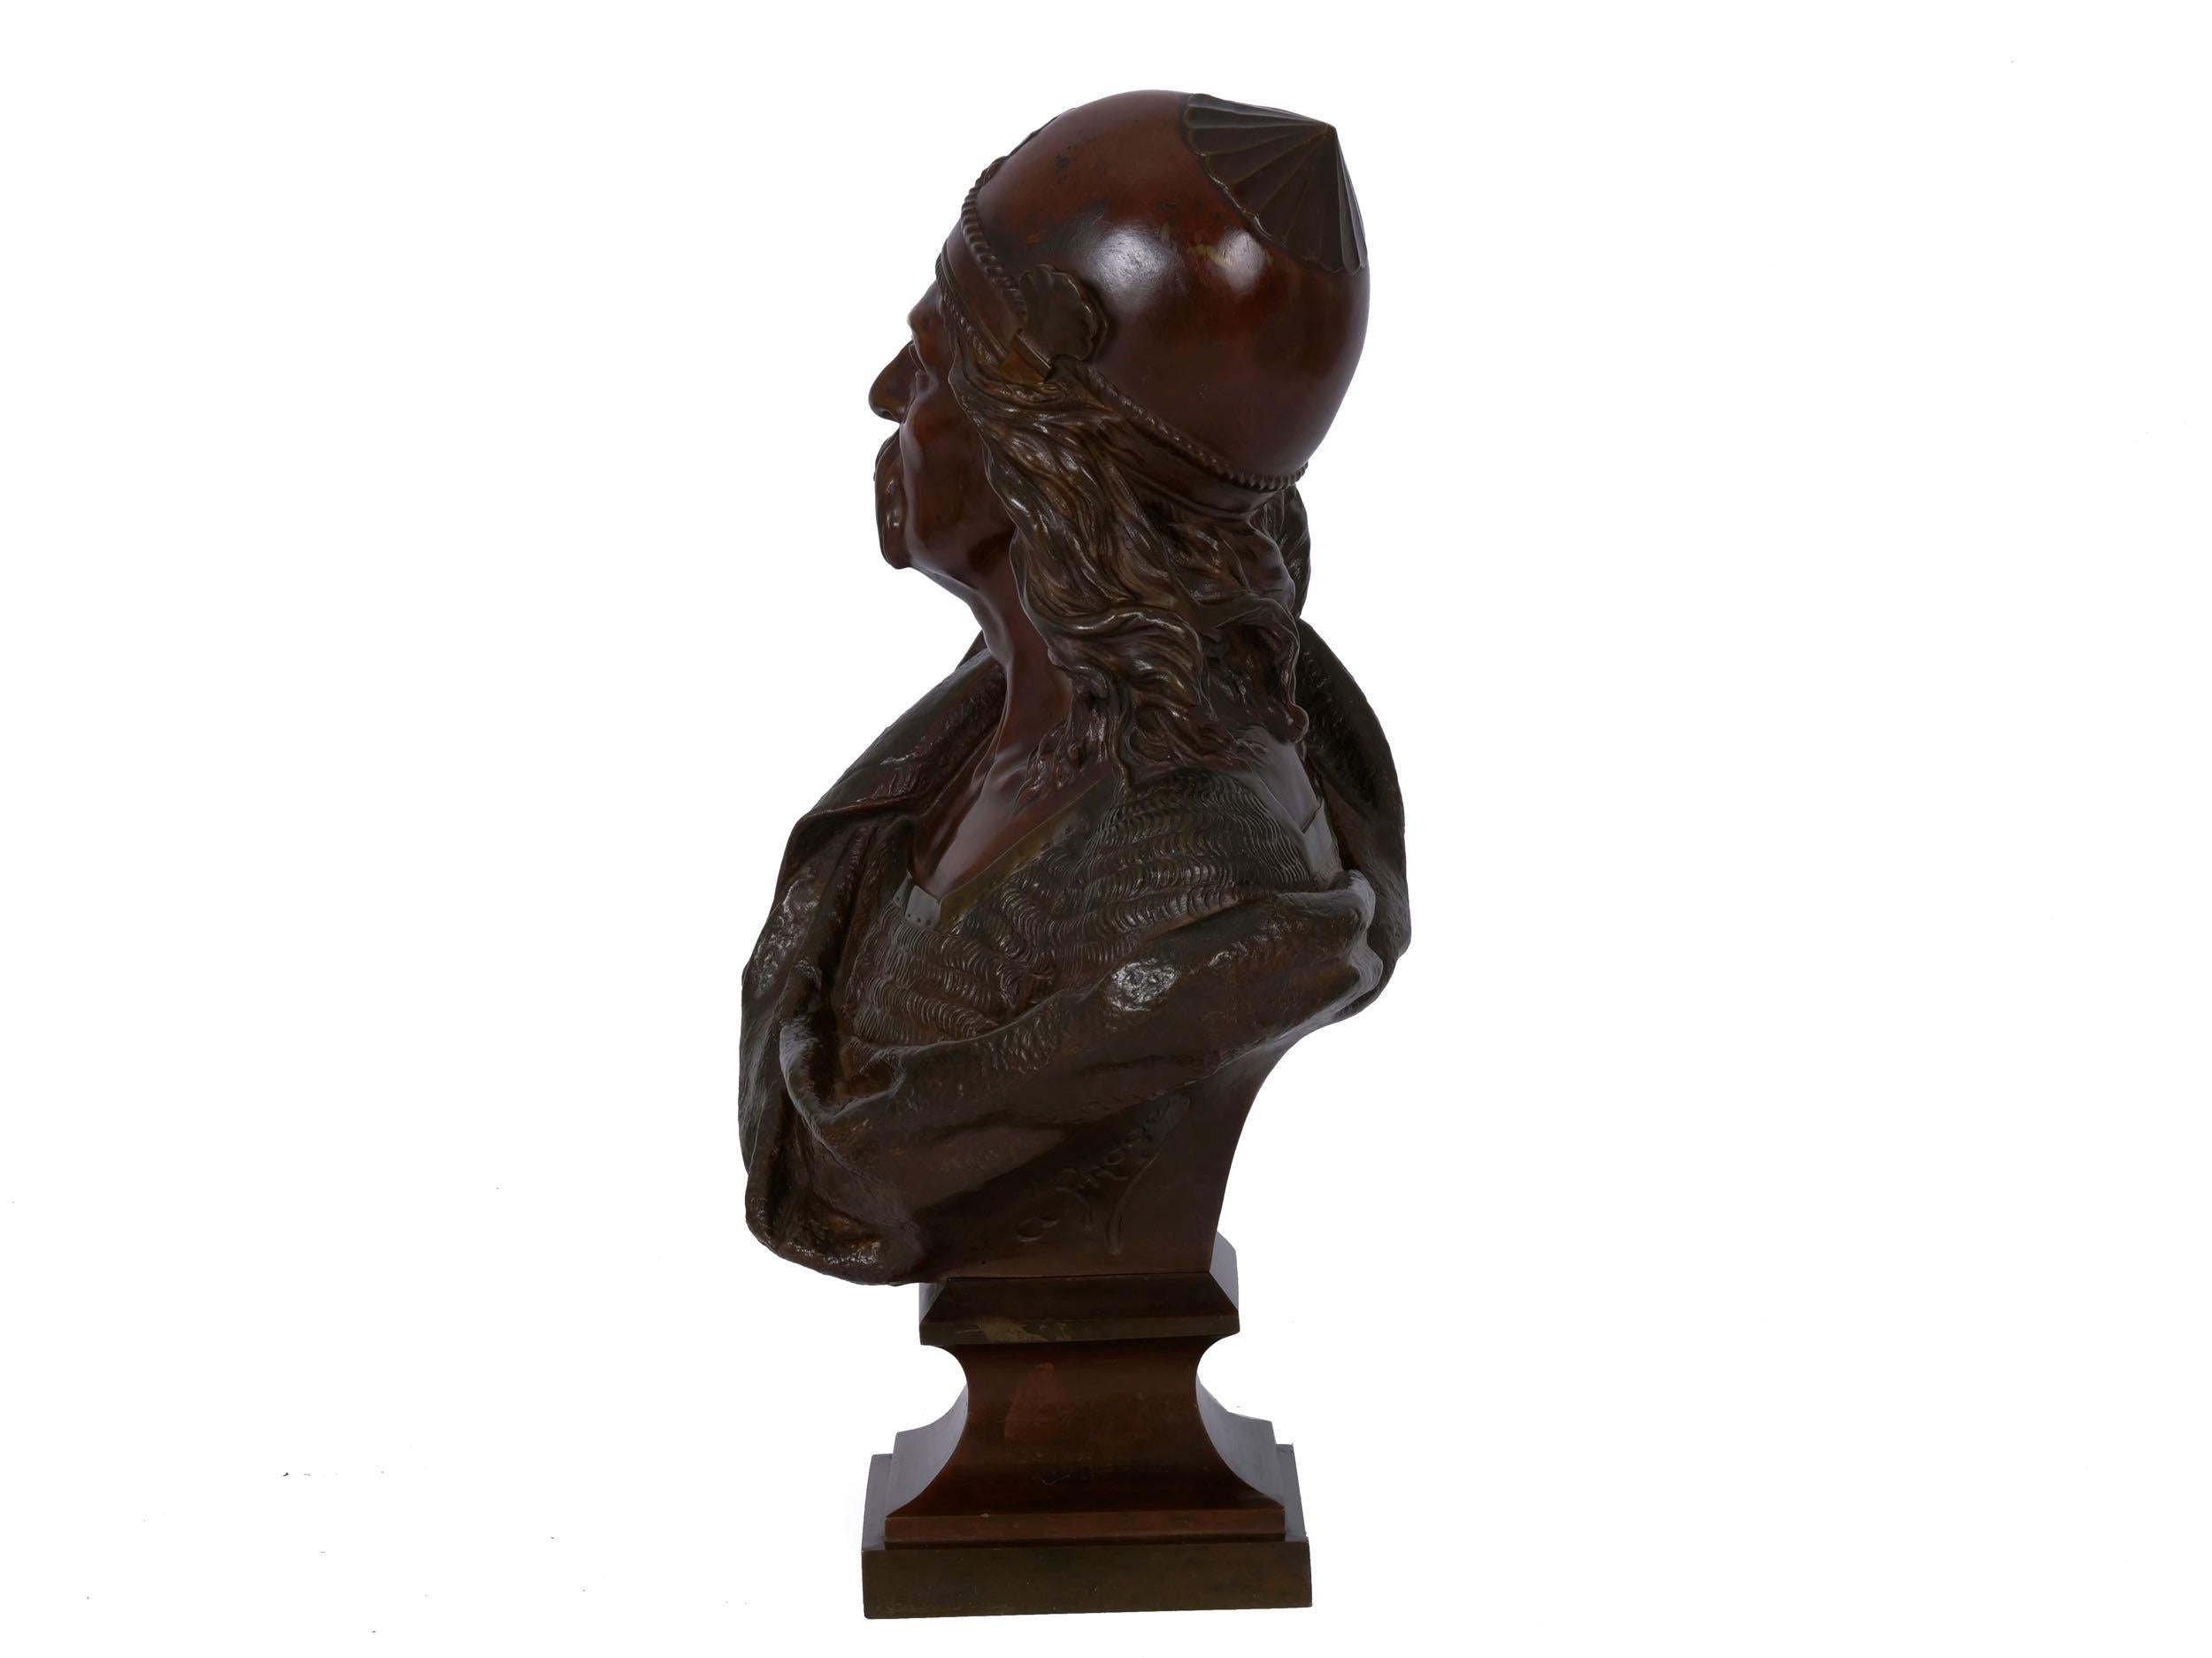 19th Century “Gallic Warrior” Antique French Bronze Sculpture Bust by Albert Froger